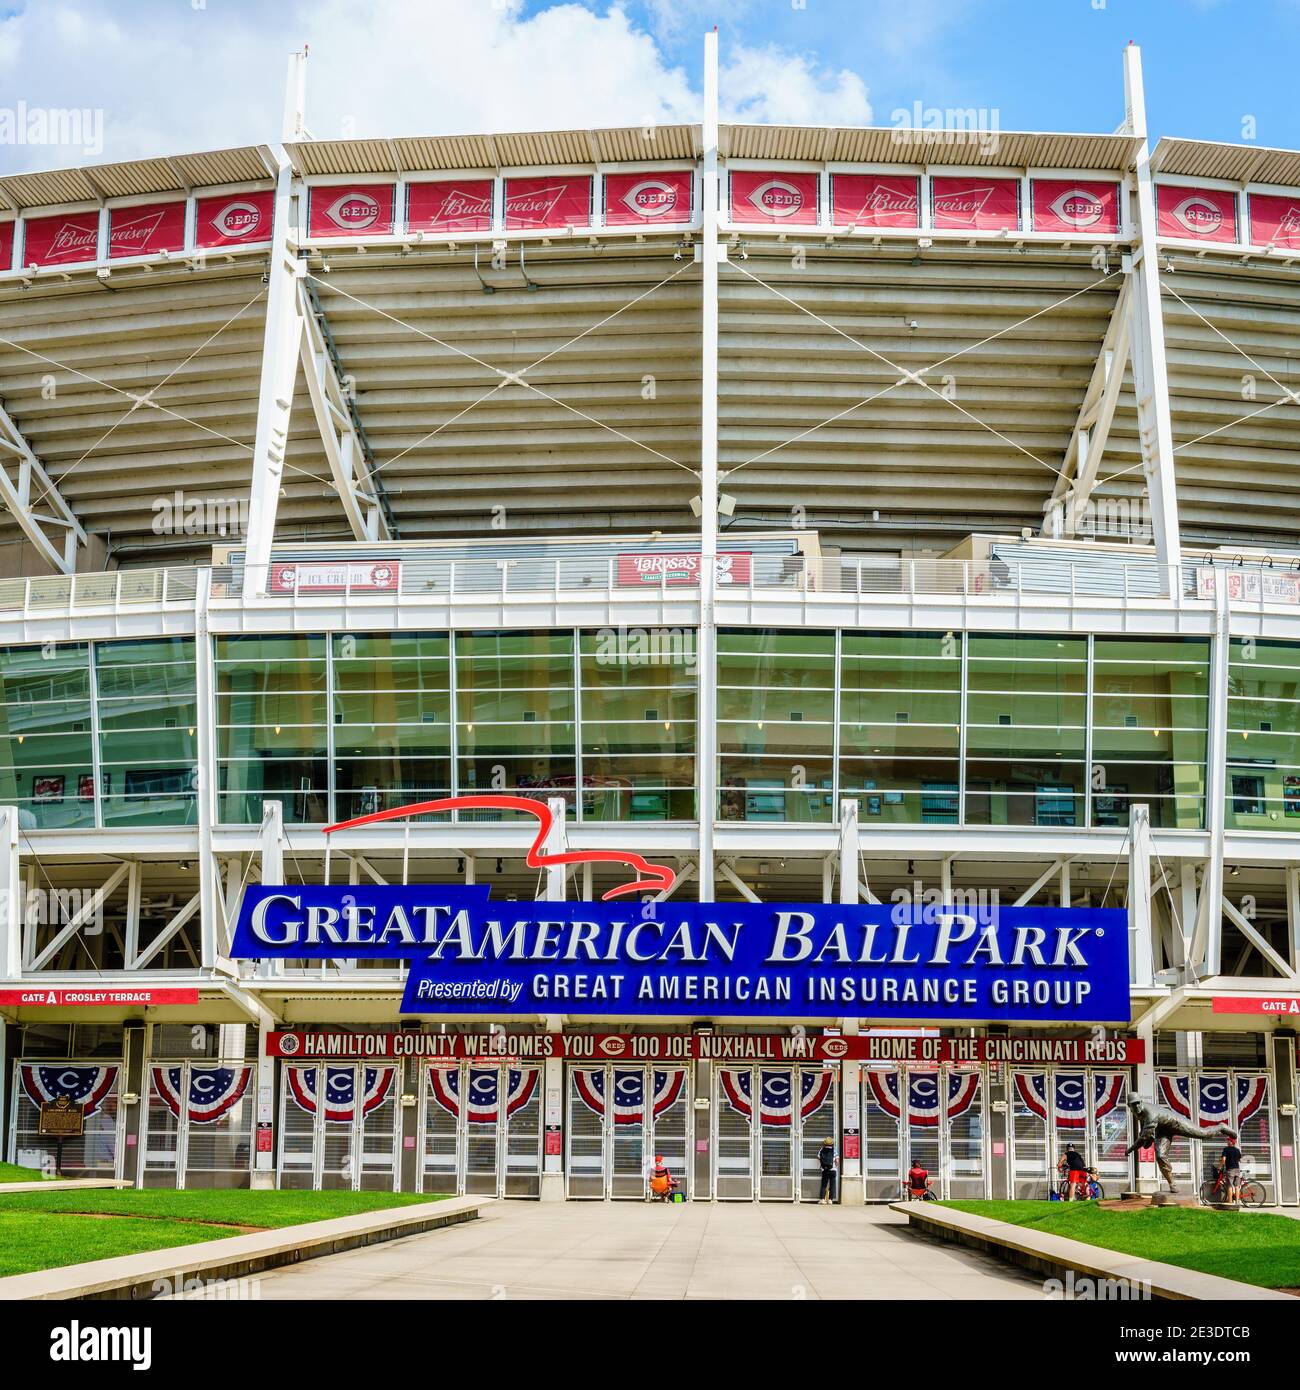 Cincinnati, Ohio, 29. August 2020: Eingang zum Great American Ball Park Stadion, dem Heimstadion des Baseballteams Cincinnati Reds Stockfoto